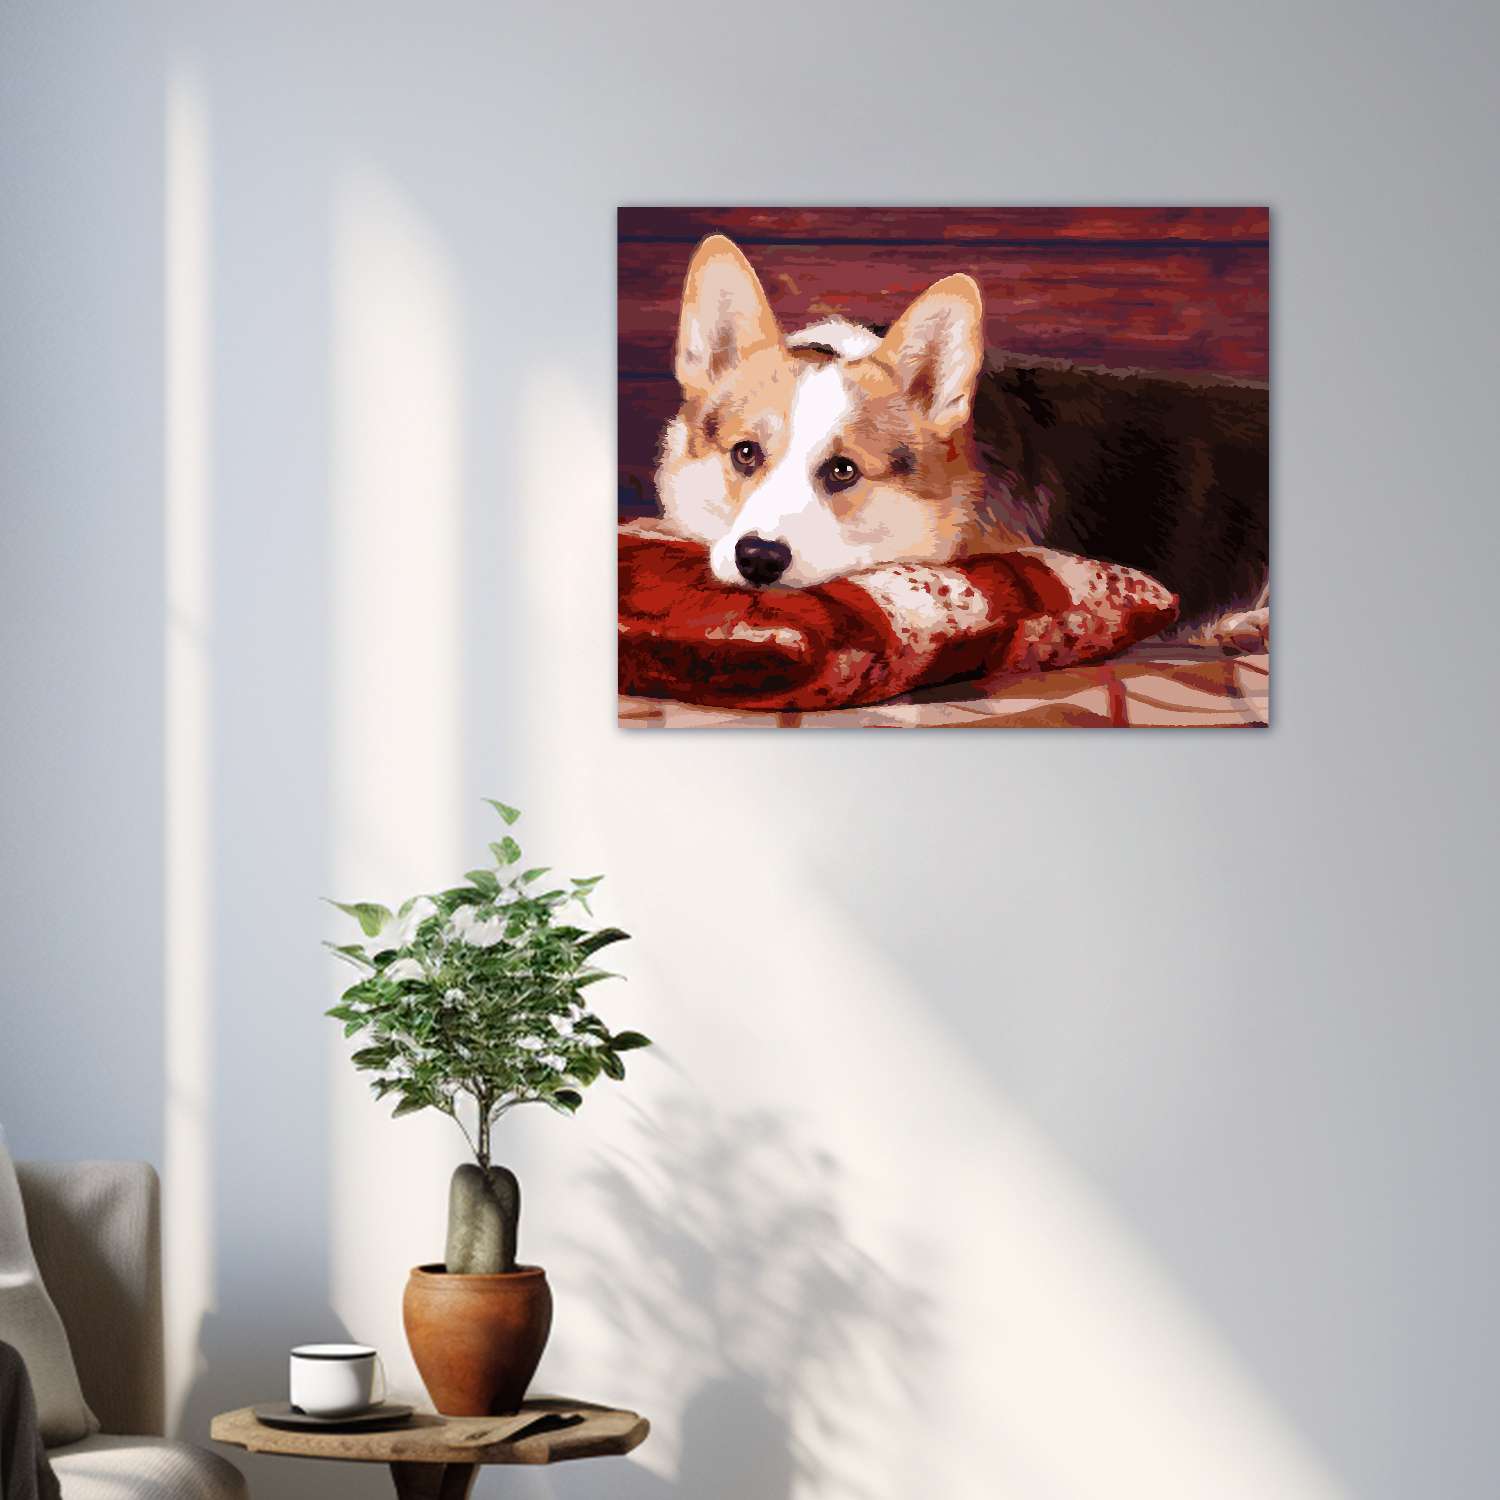 Картина по номерам LORI Корги 40х50 см на холсте с деревянным подрамником - фото 11